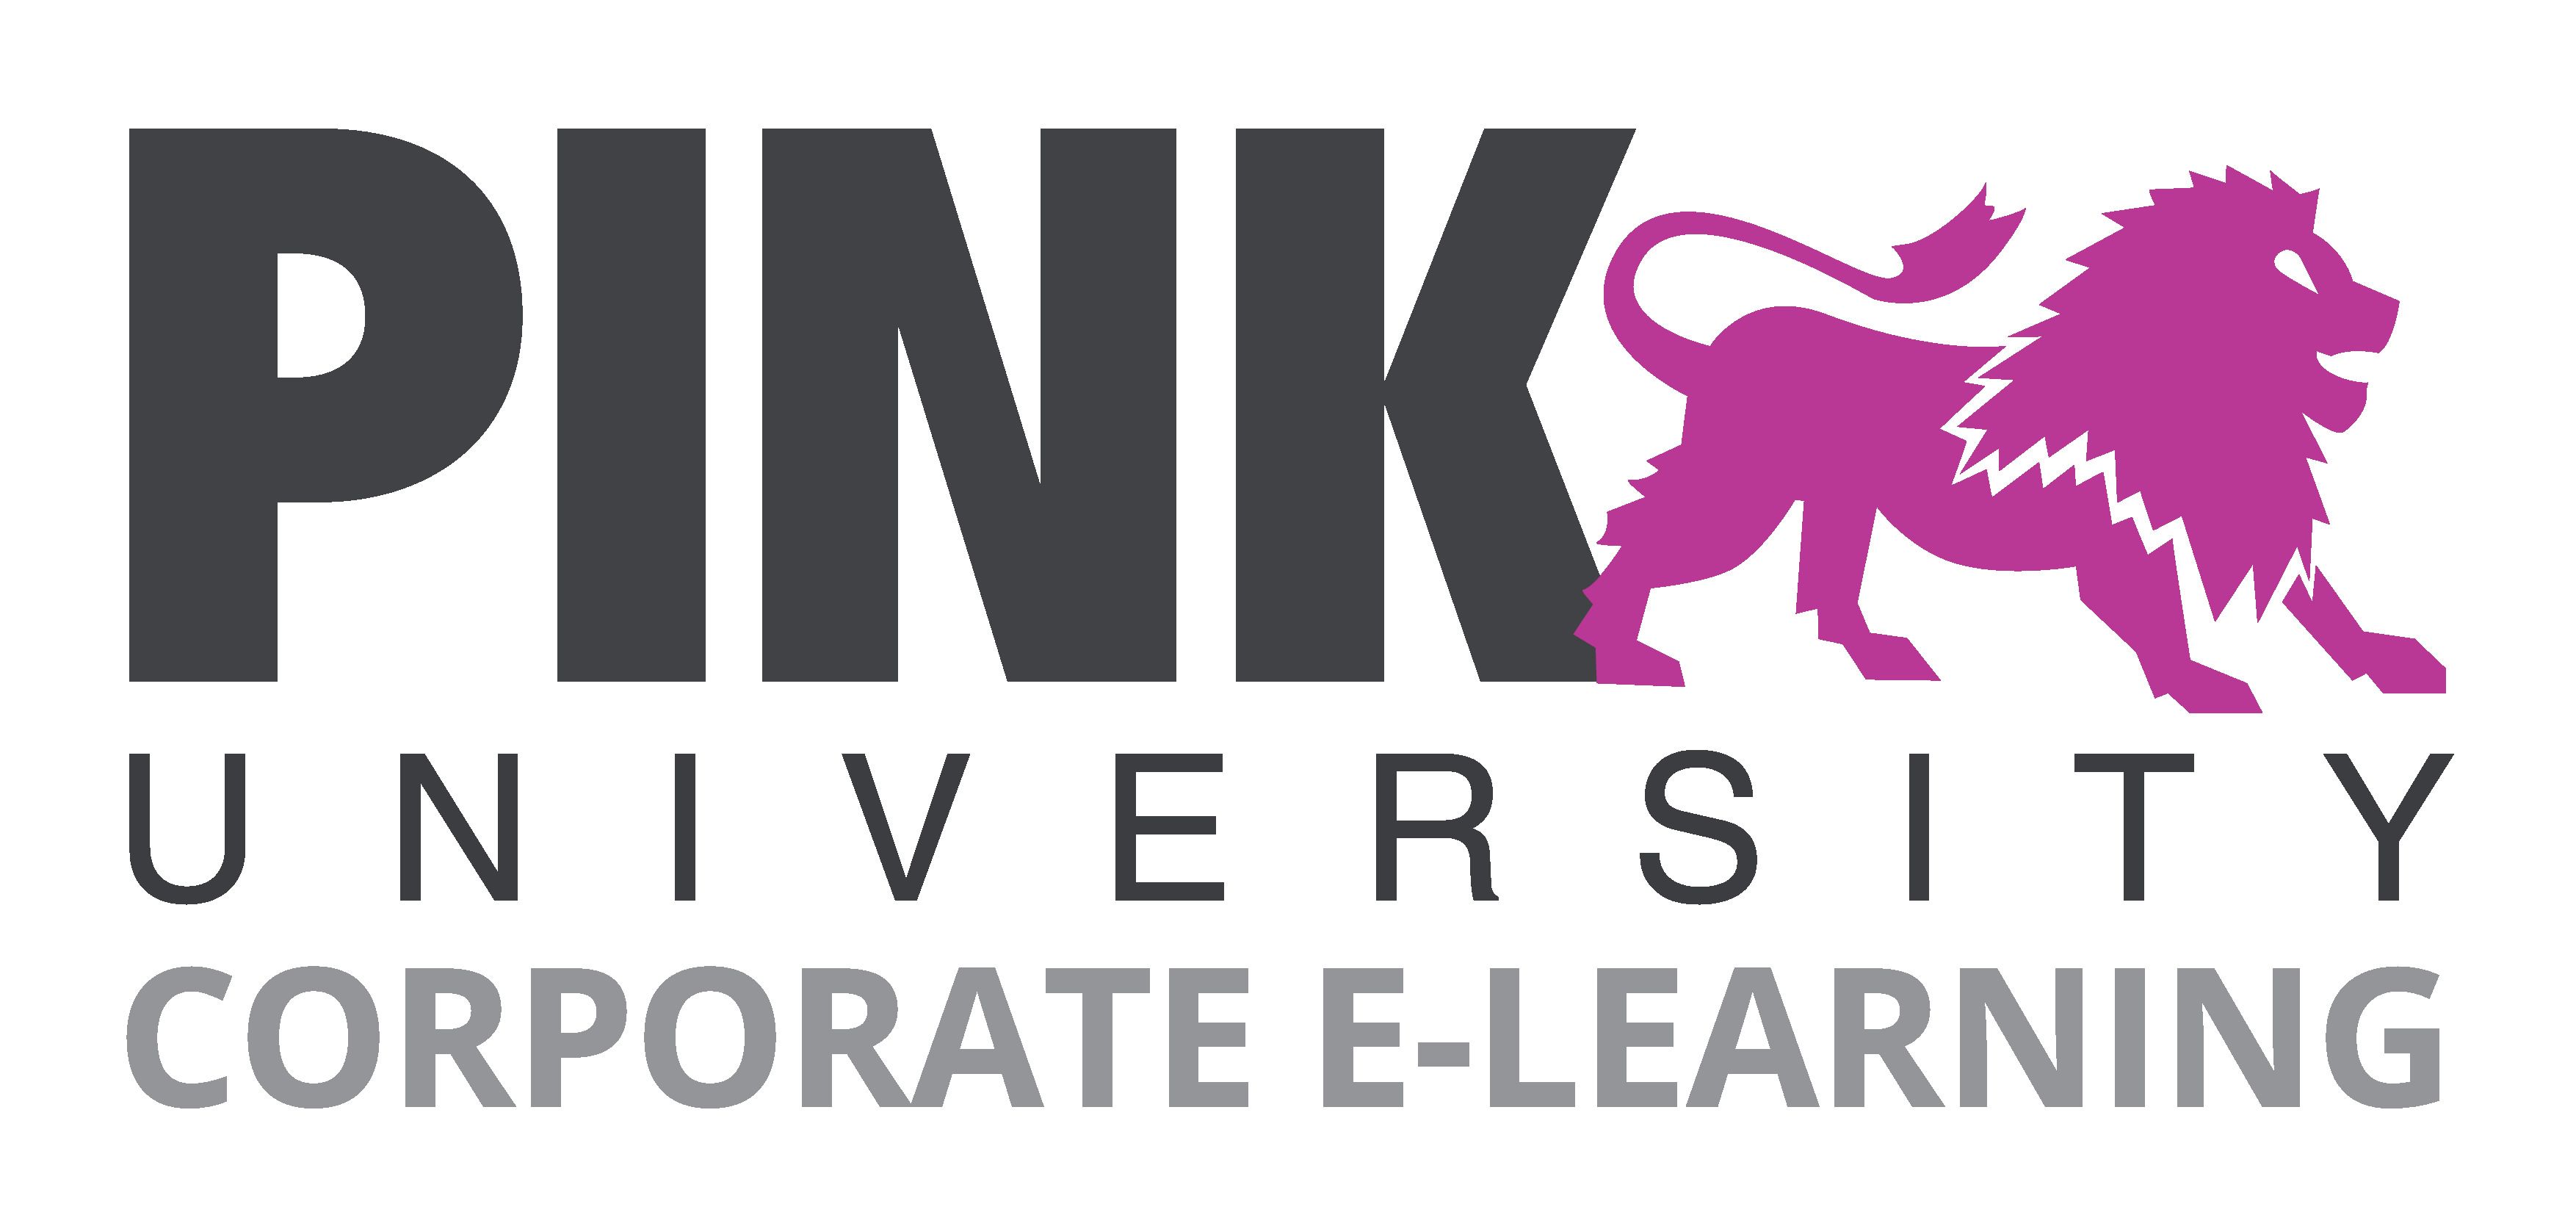 Pink University